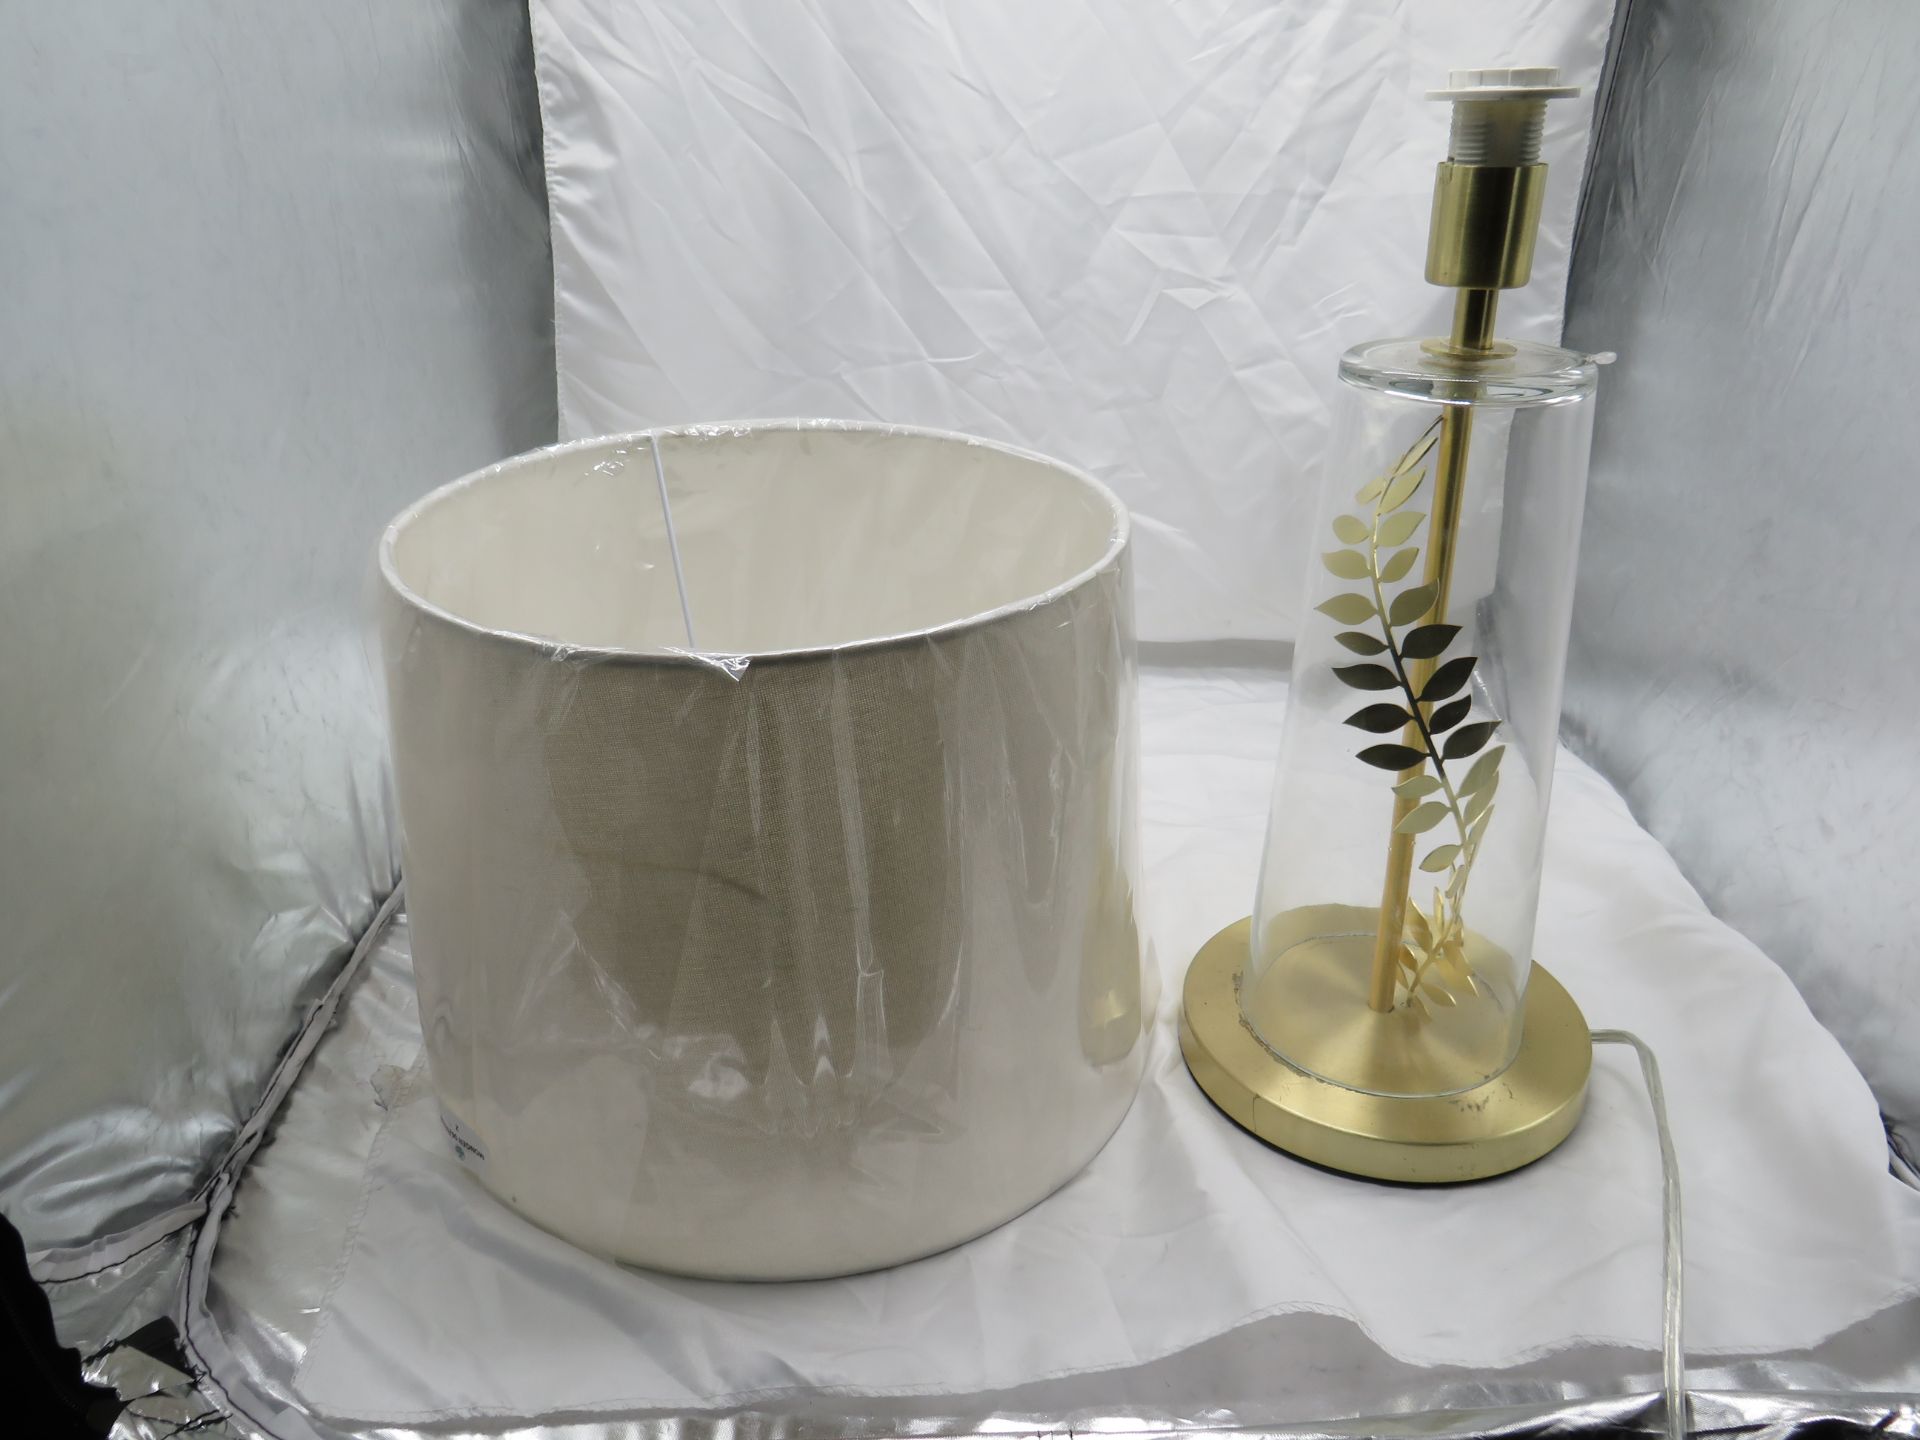 Table Lamp Gold Leaf Design With Glass Base - Shade Slight Damaged.